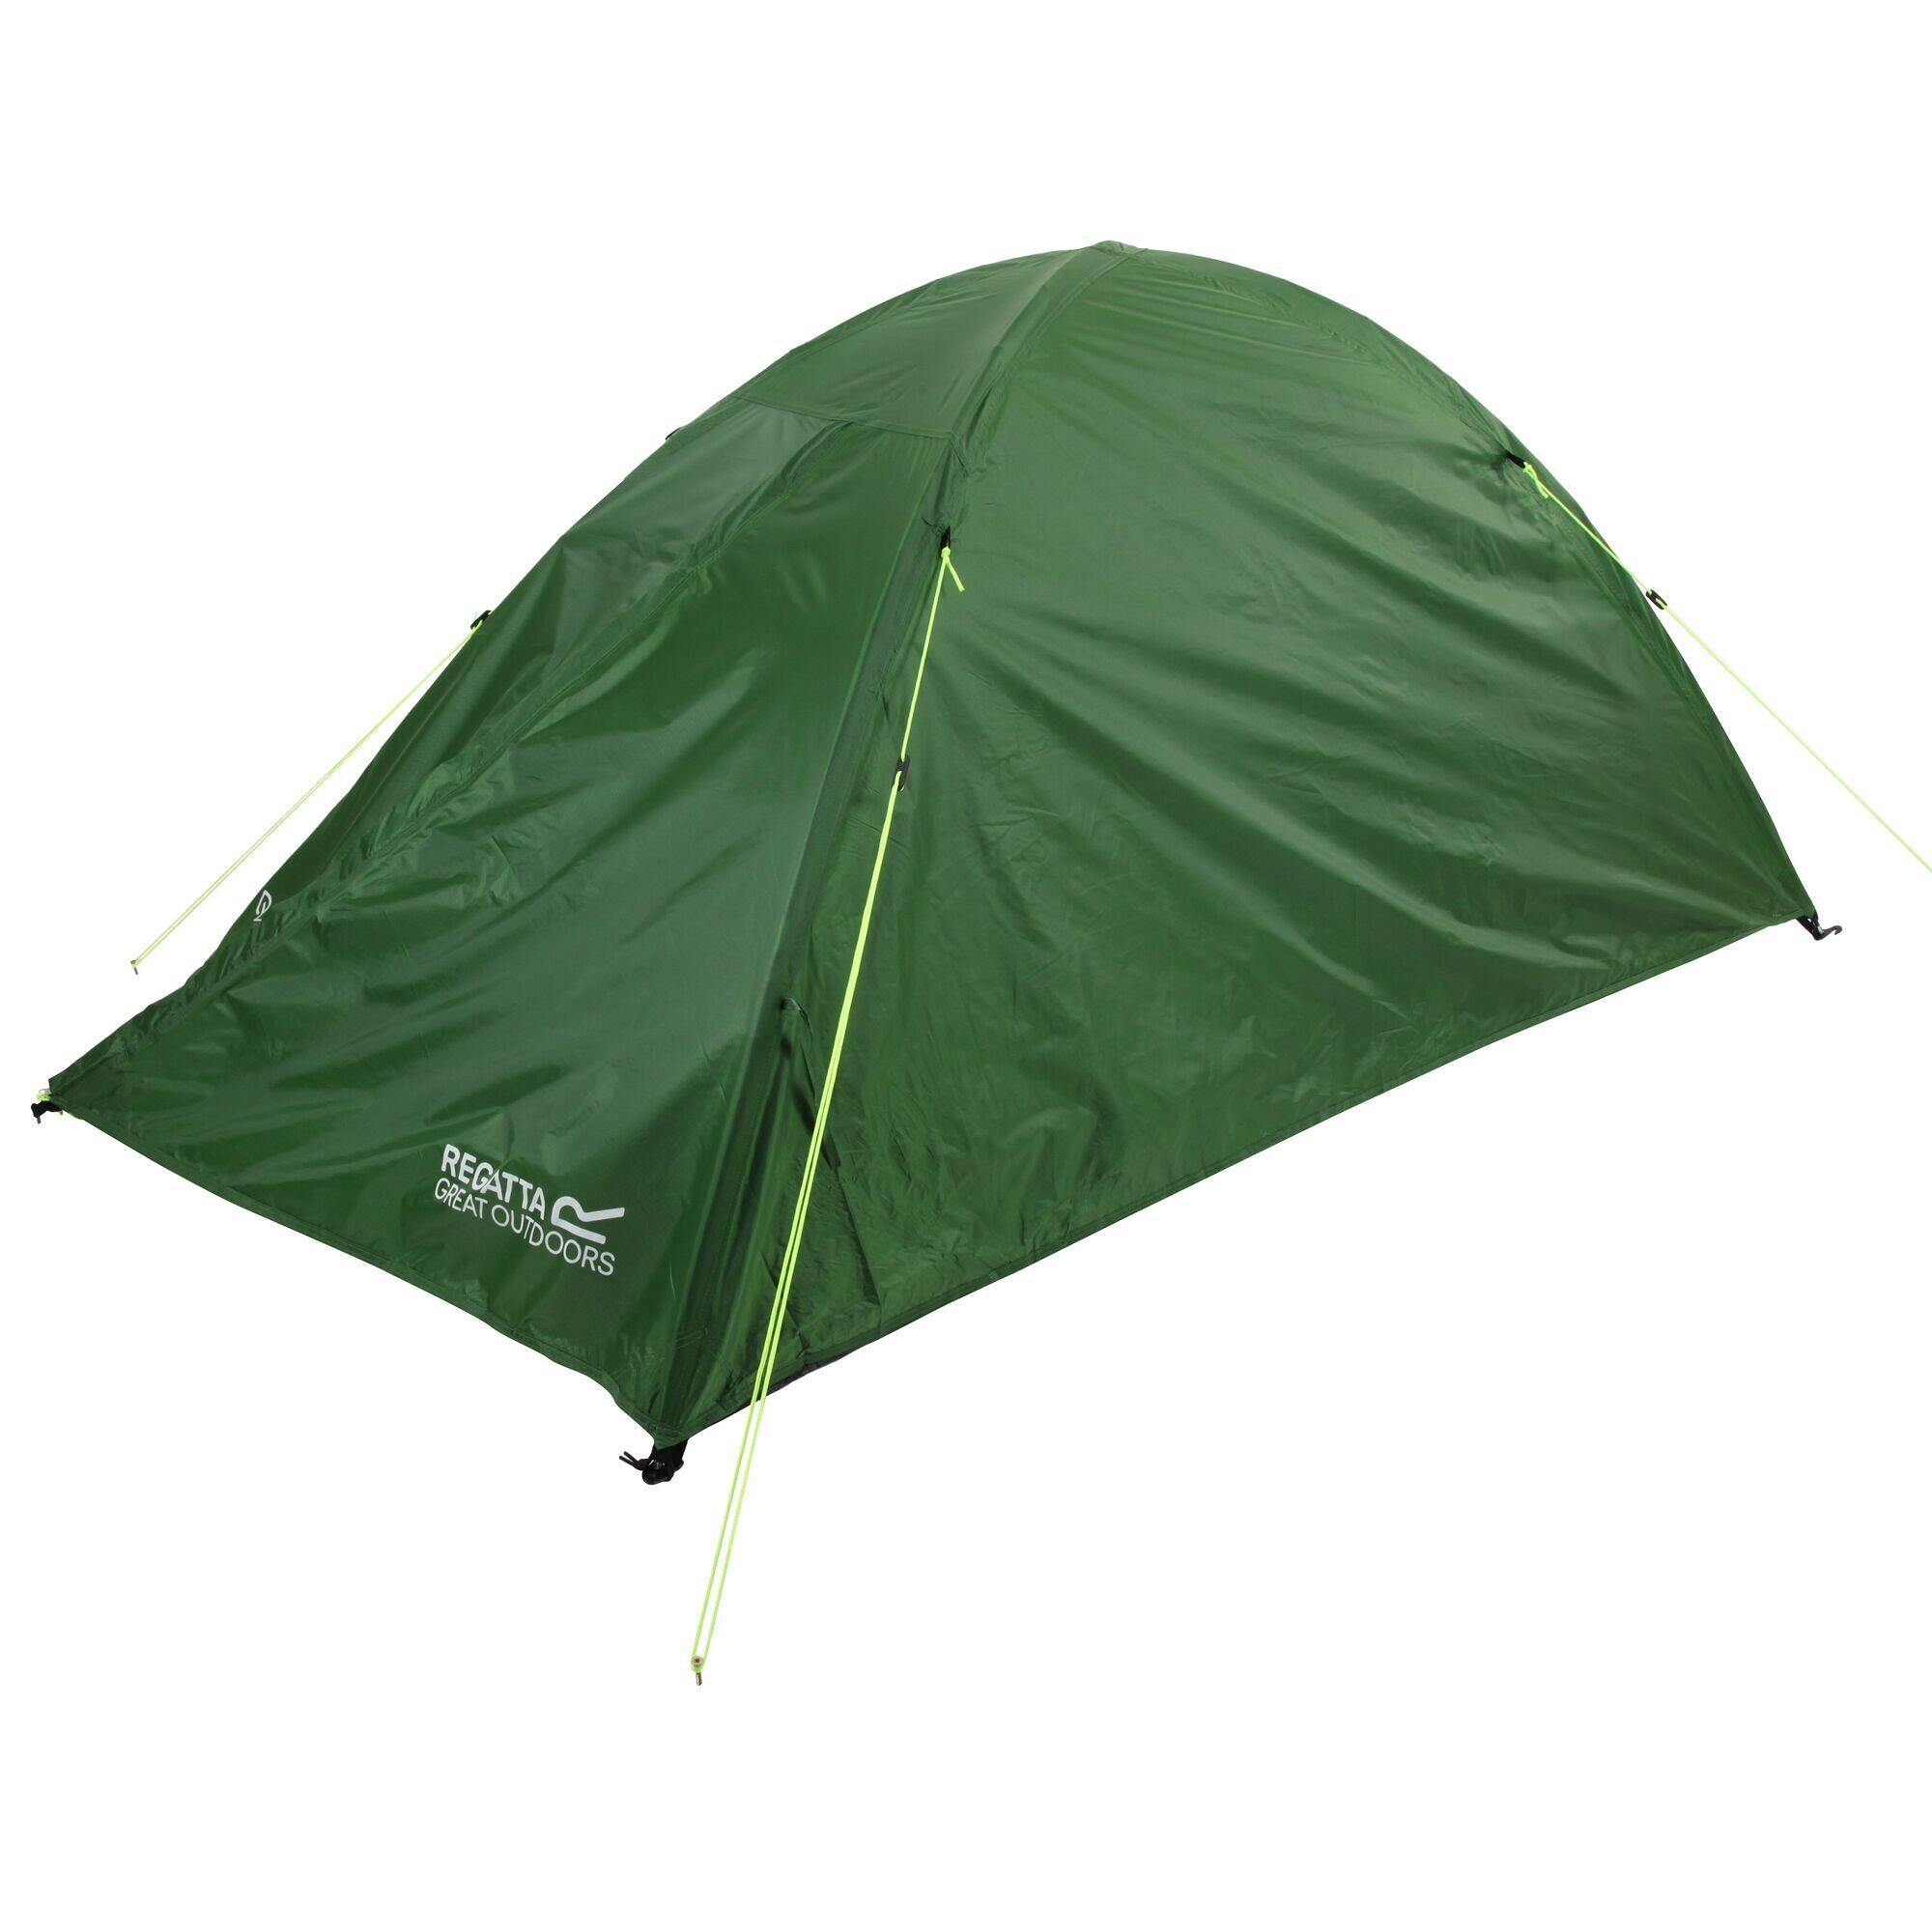 REGATTA Evogreen 2-Man Adults' Camping Camping Tent